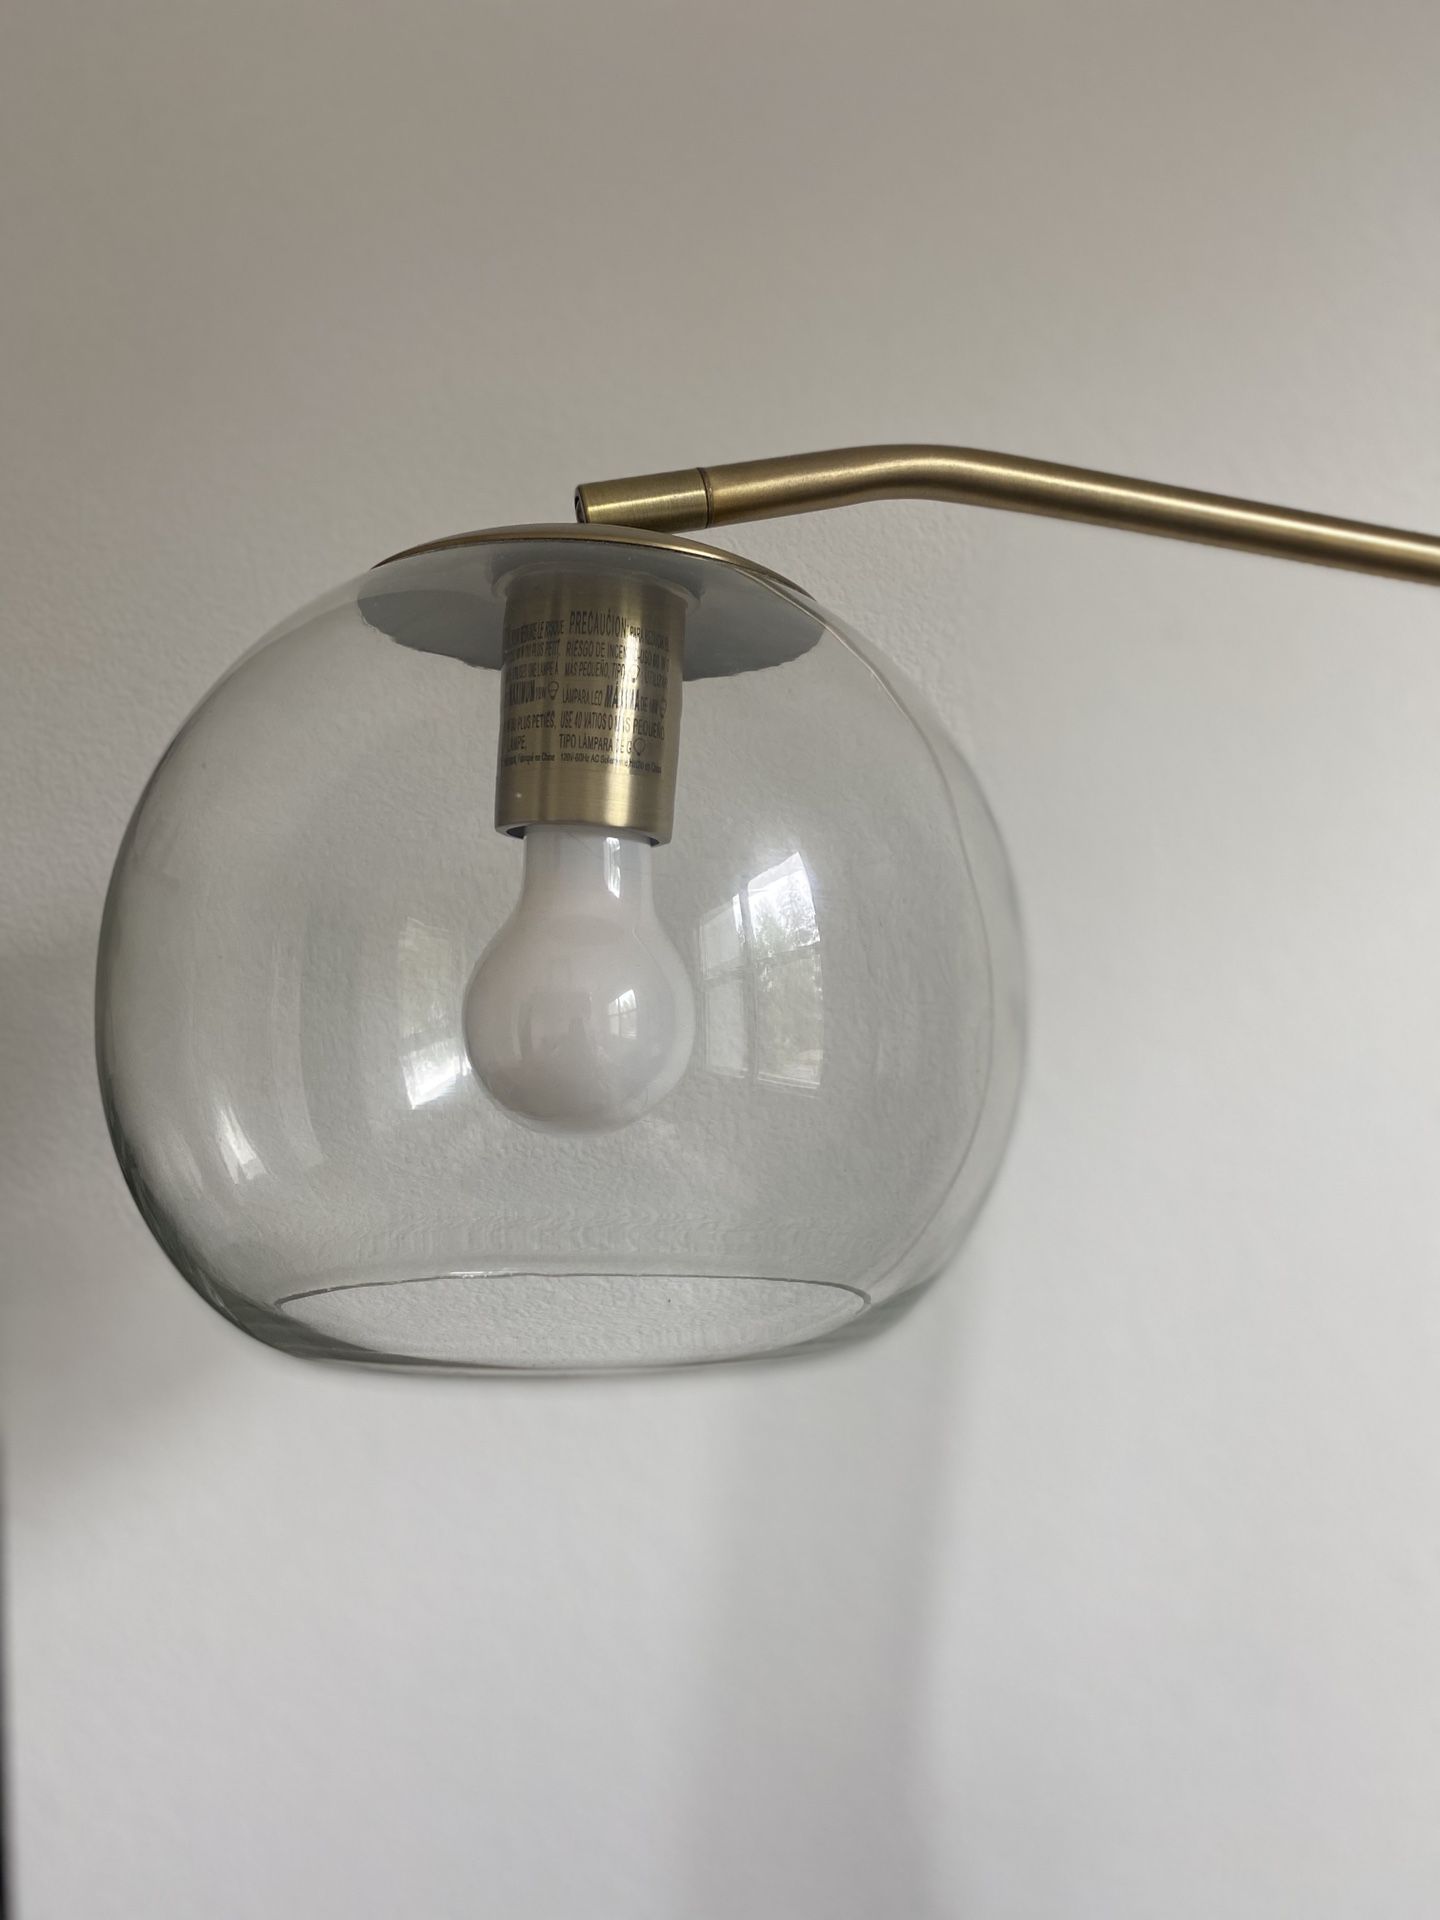 Gold retro-style lamp